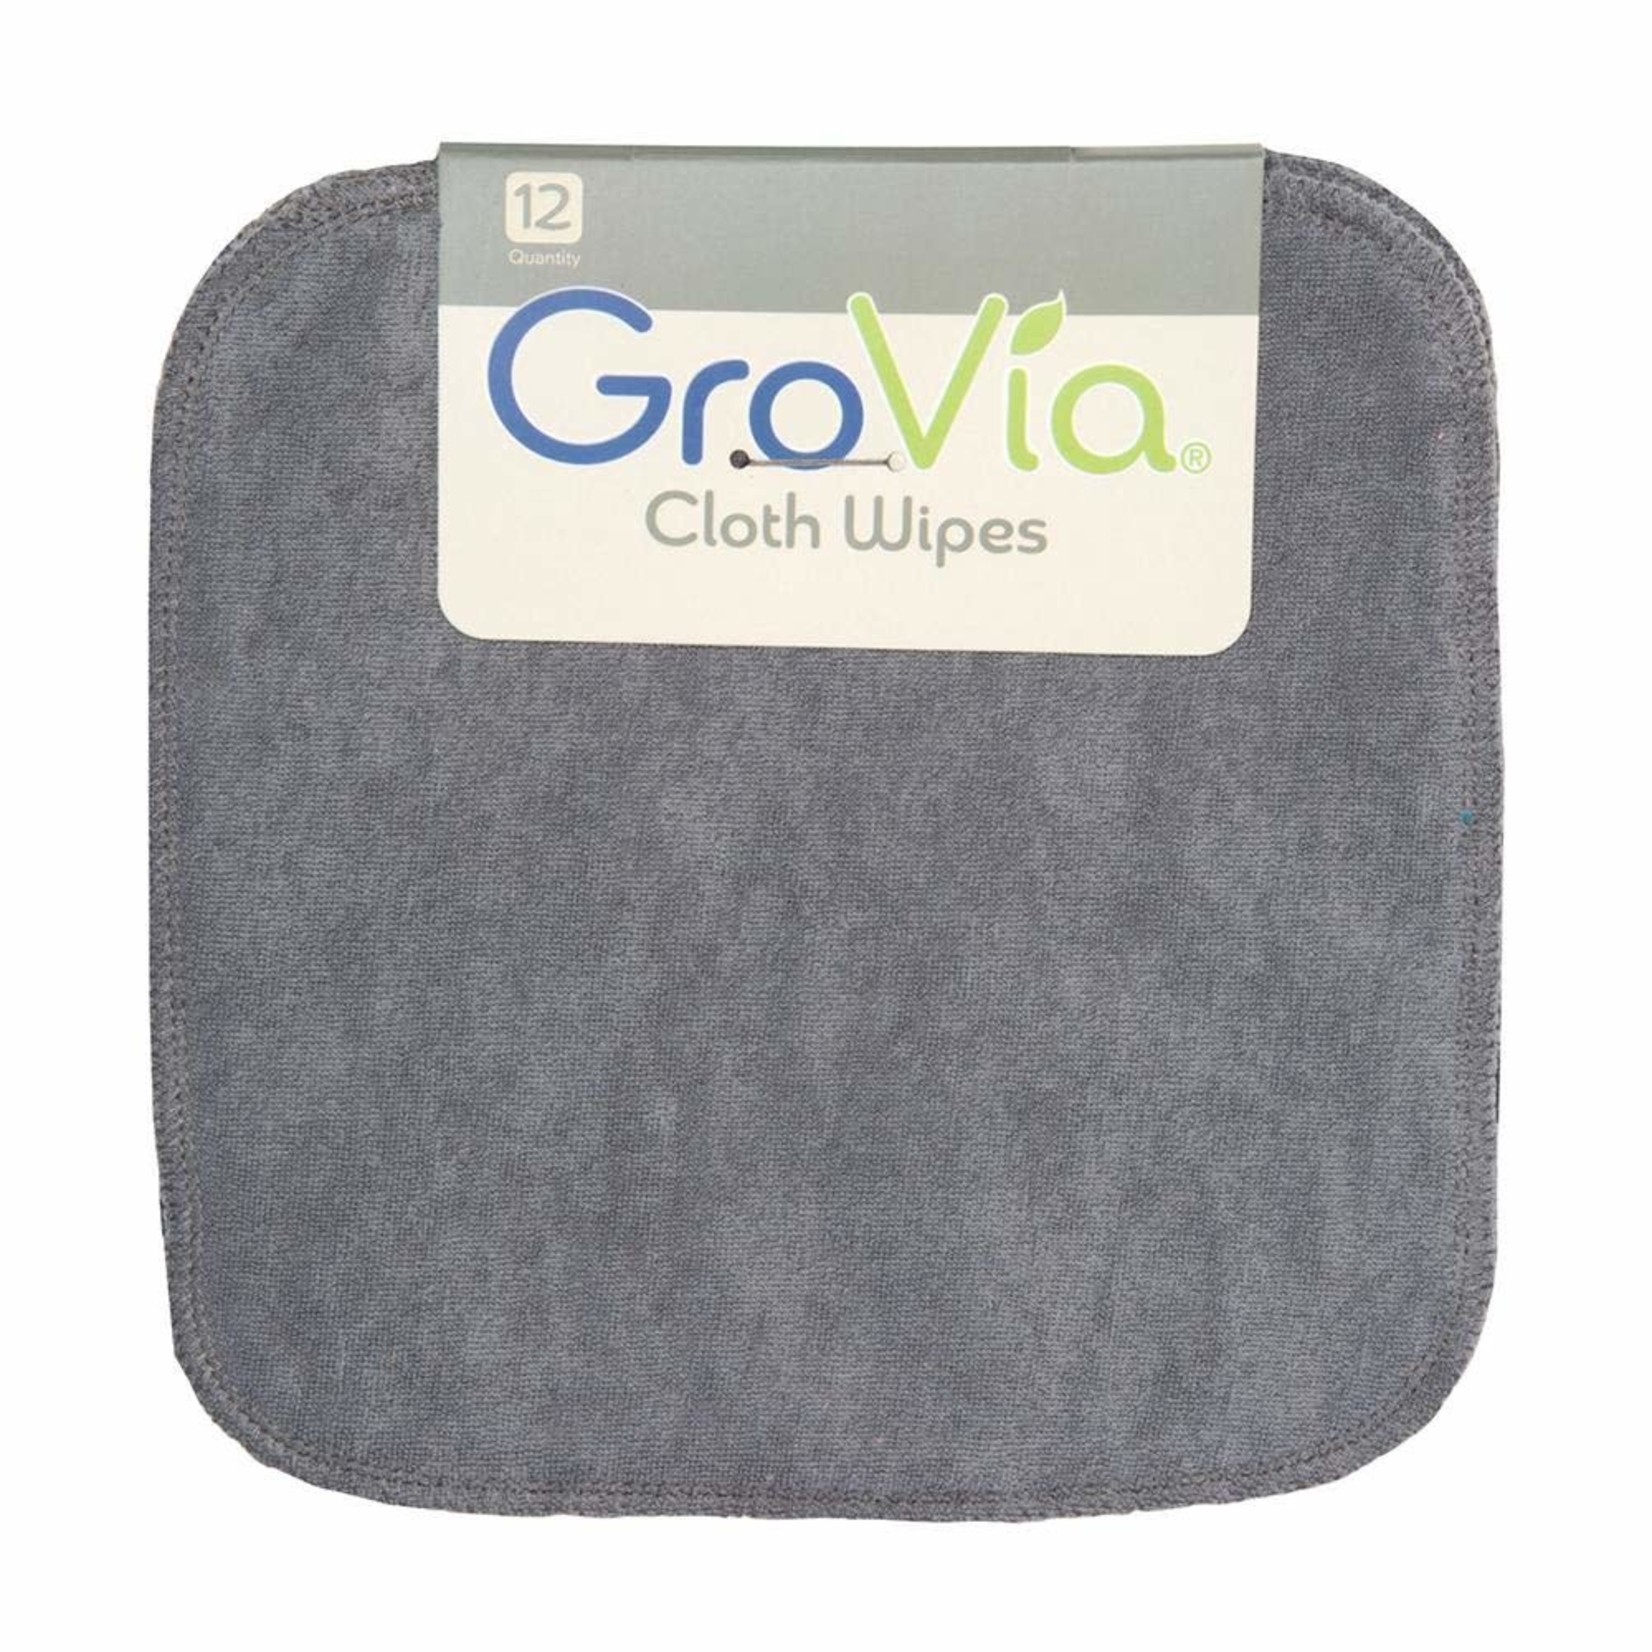 Grovia GROVIA CLOTH WIPES 12PK CLOUD